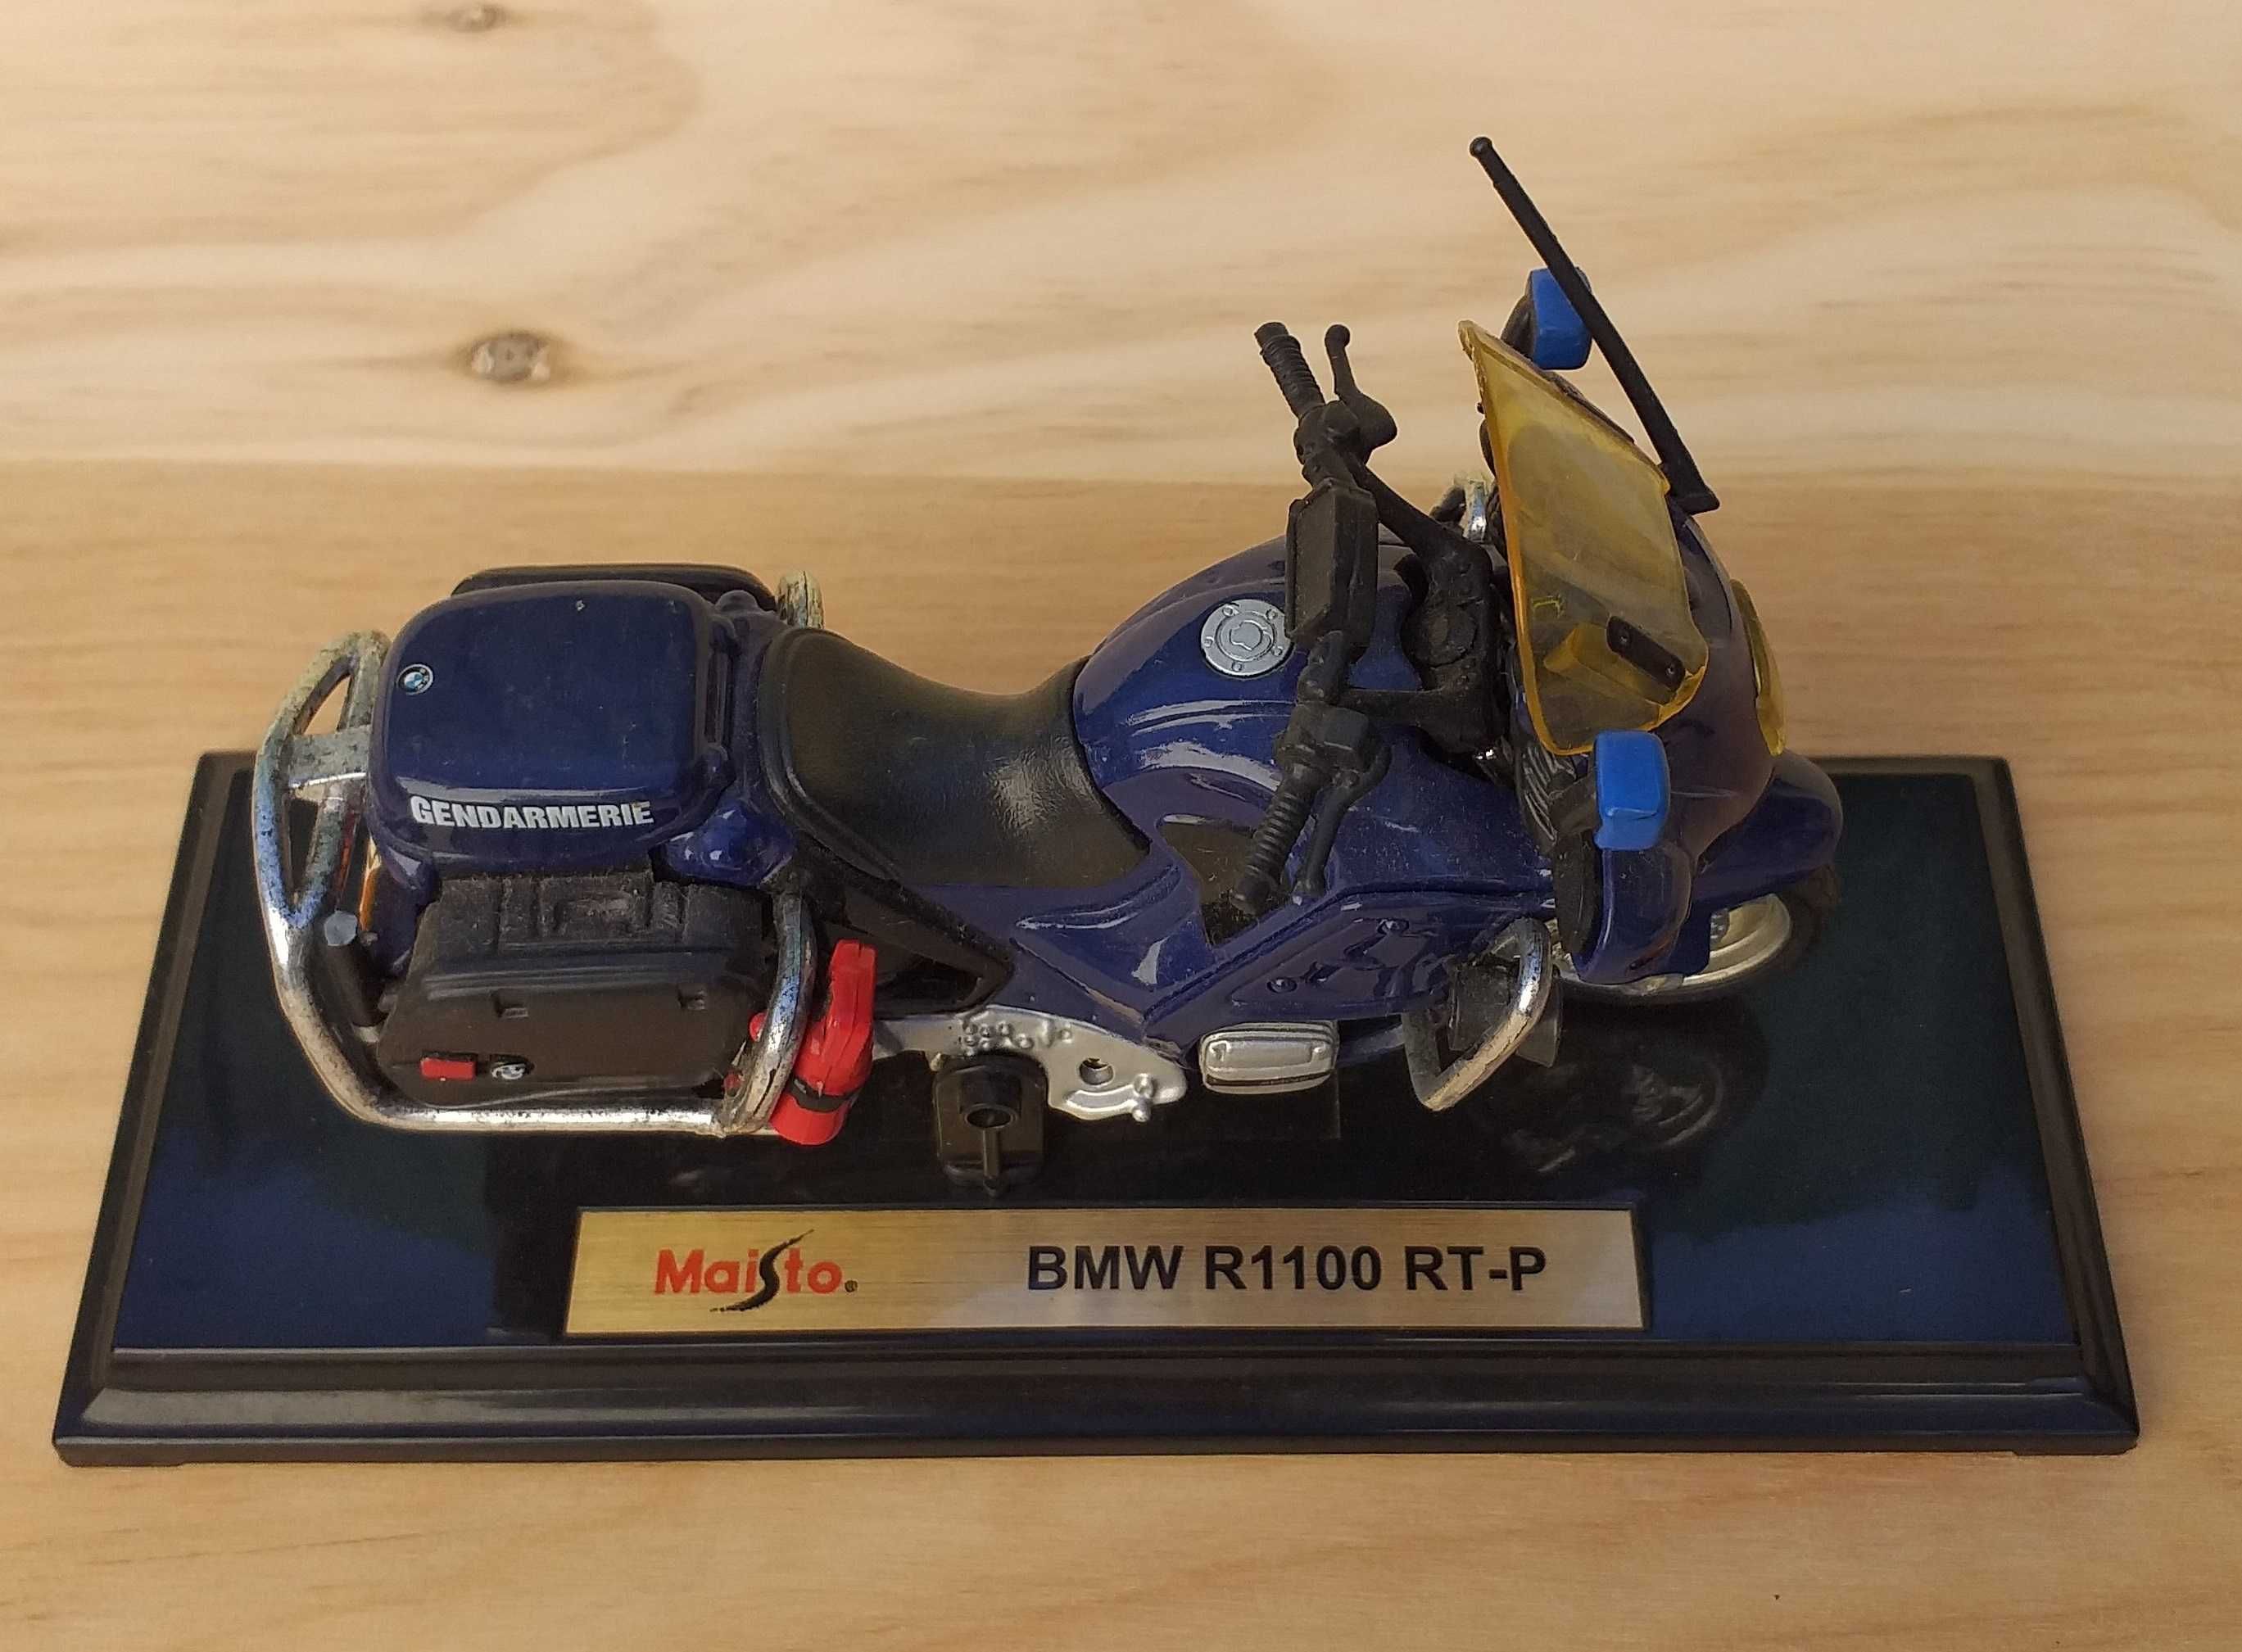 BMW, moto miniatura, excelente para coleccionadores